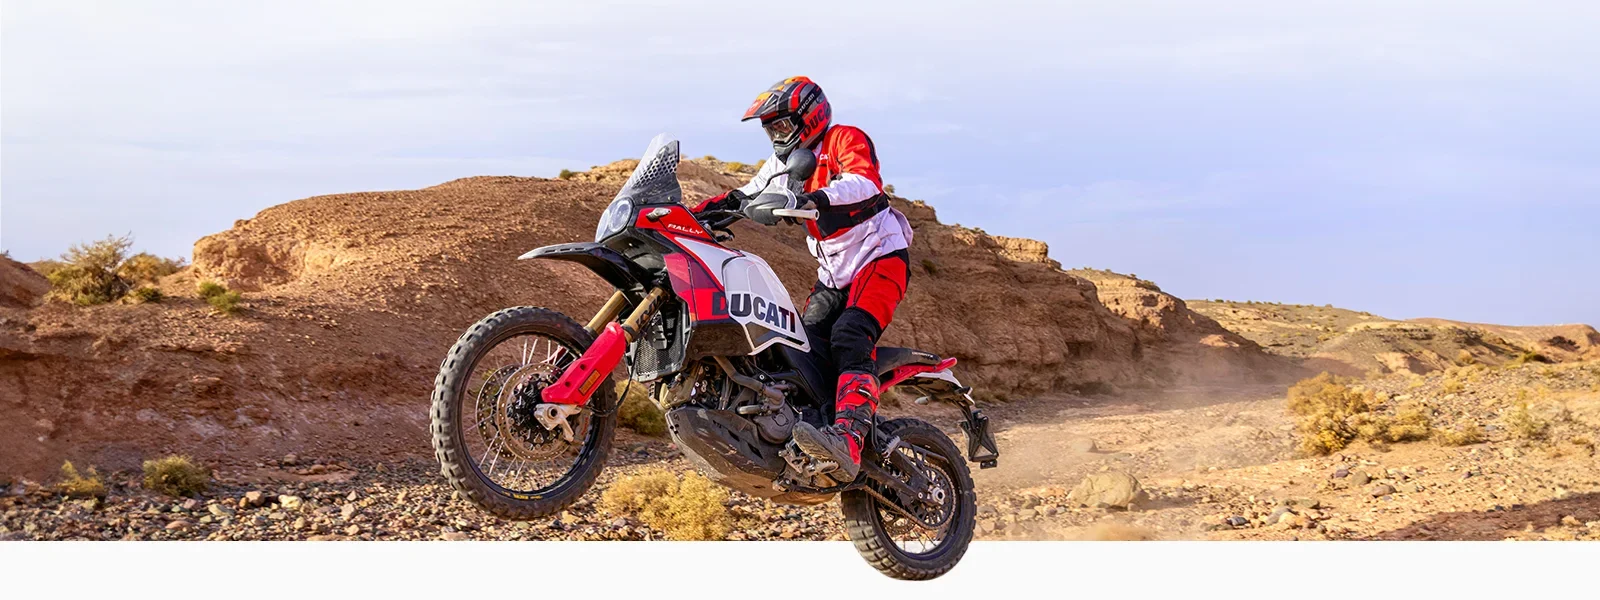 Ducati-DesertX-Rally-DWP24-Overview-hero-short-1600x1000